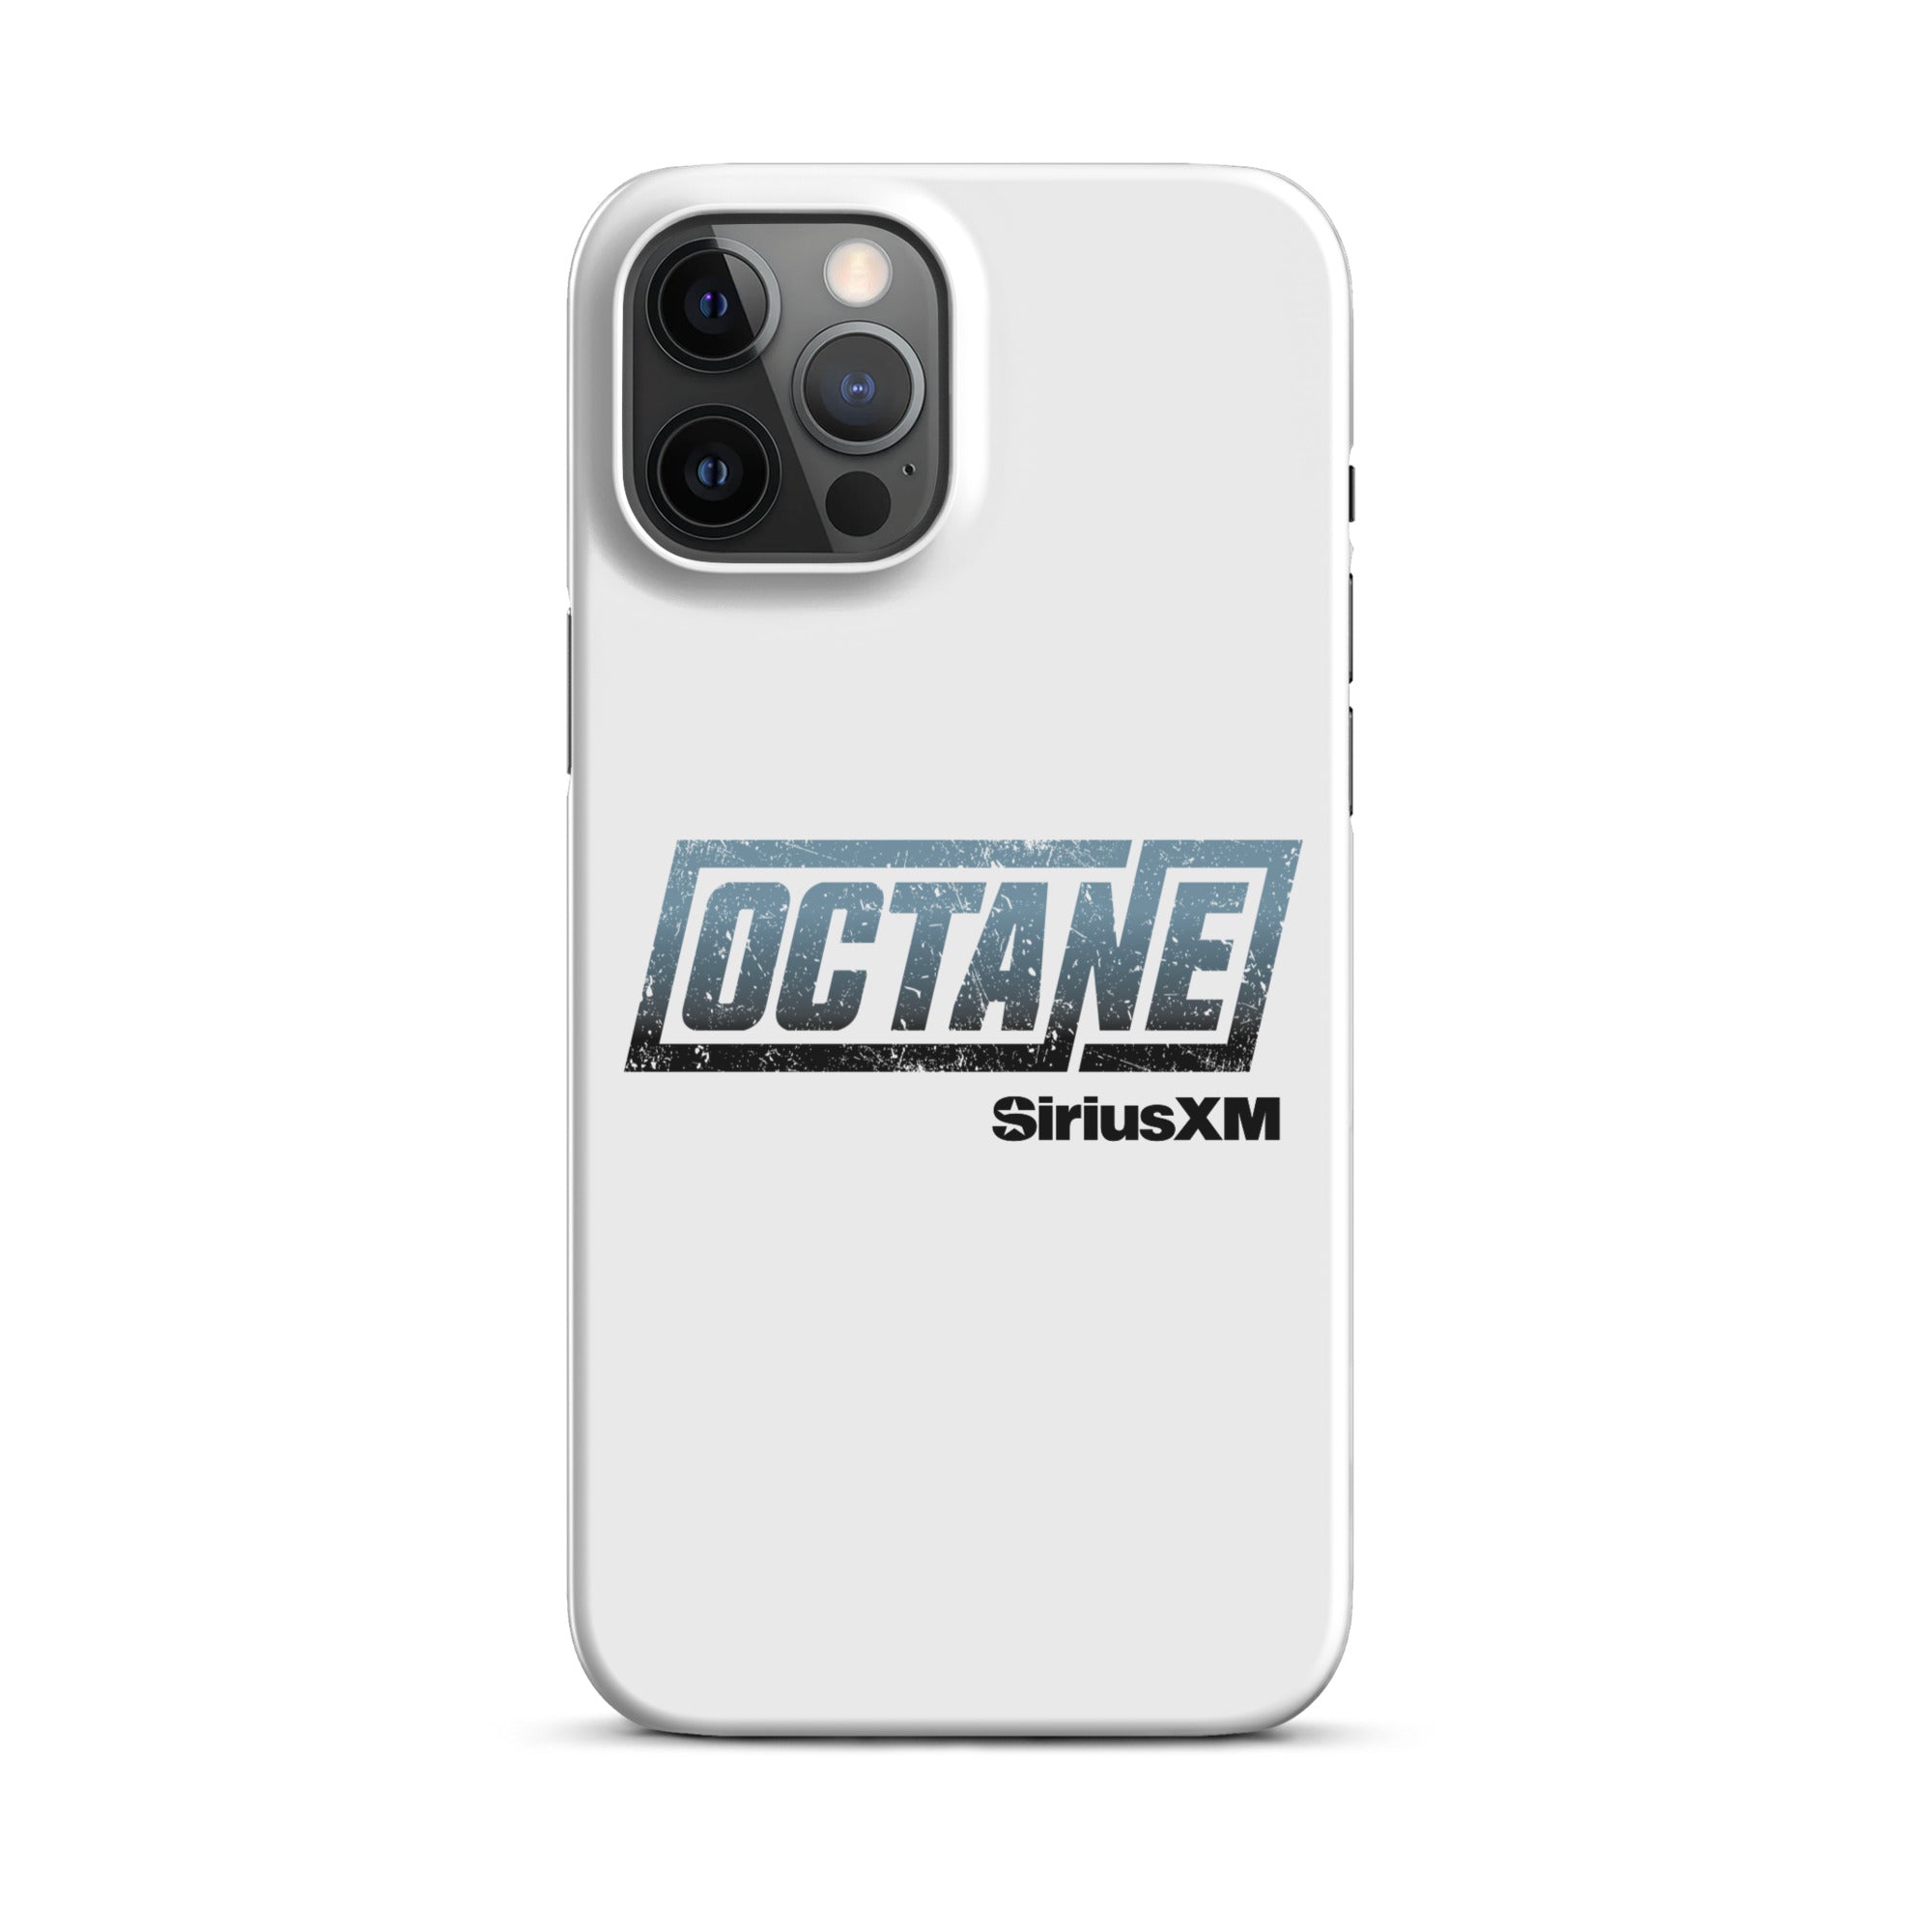 Octane: iPhone® Snap Case